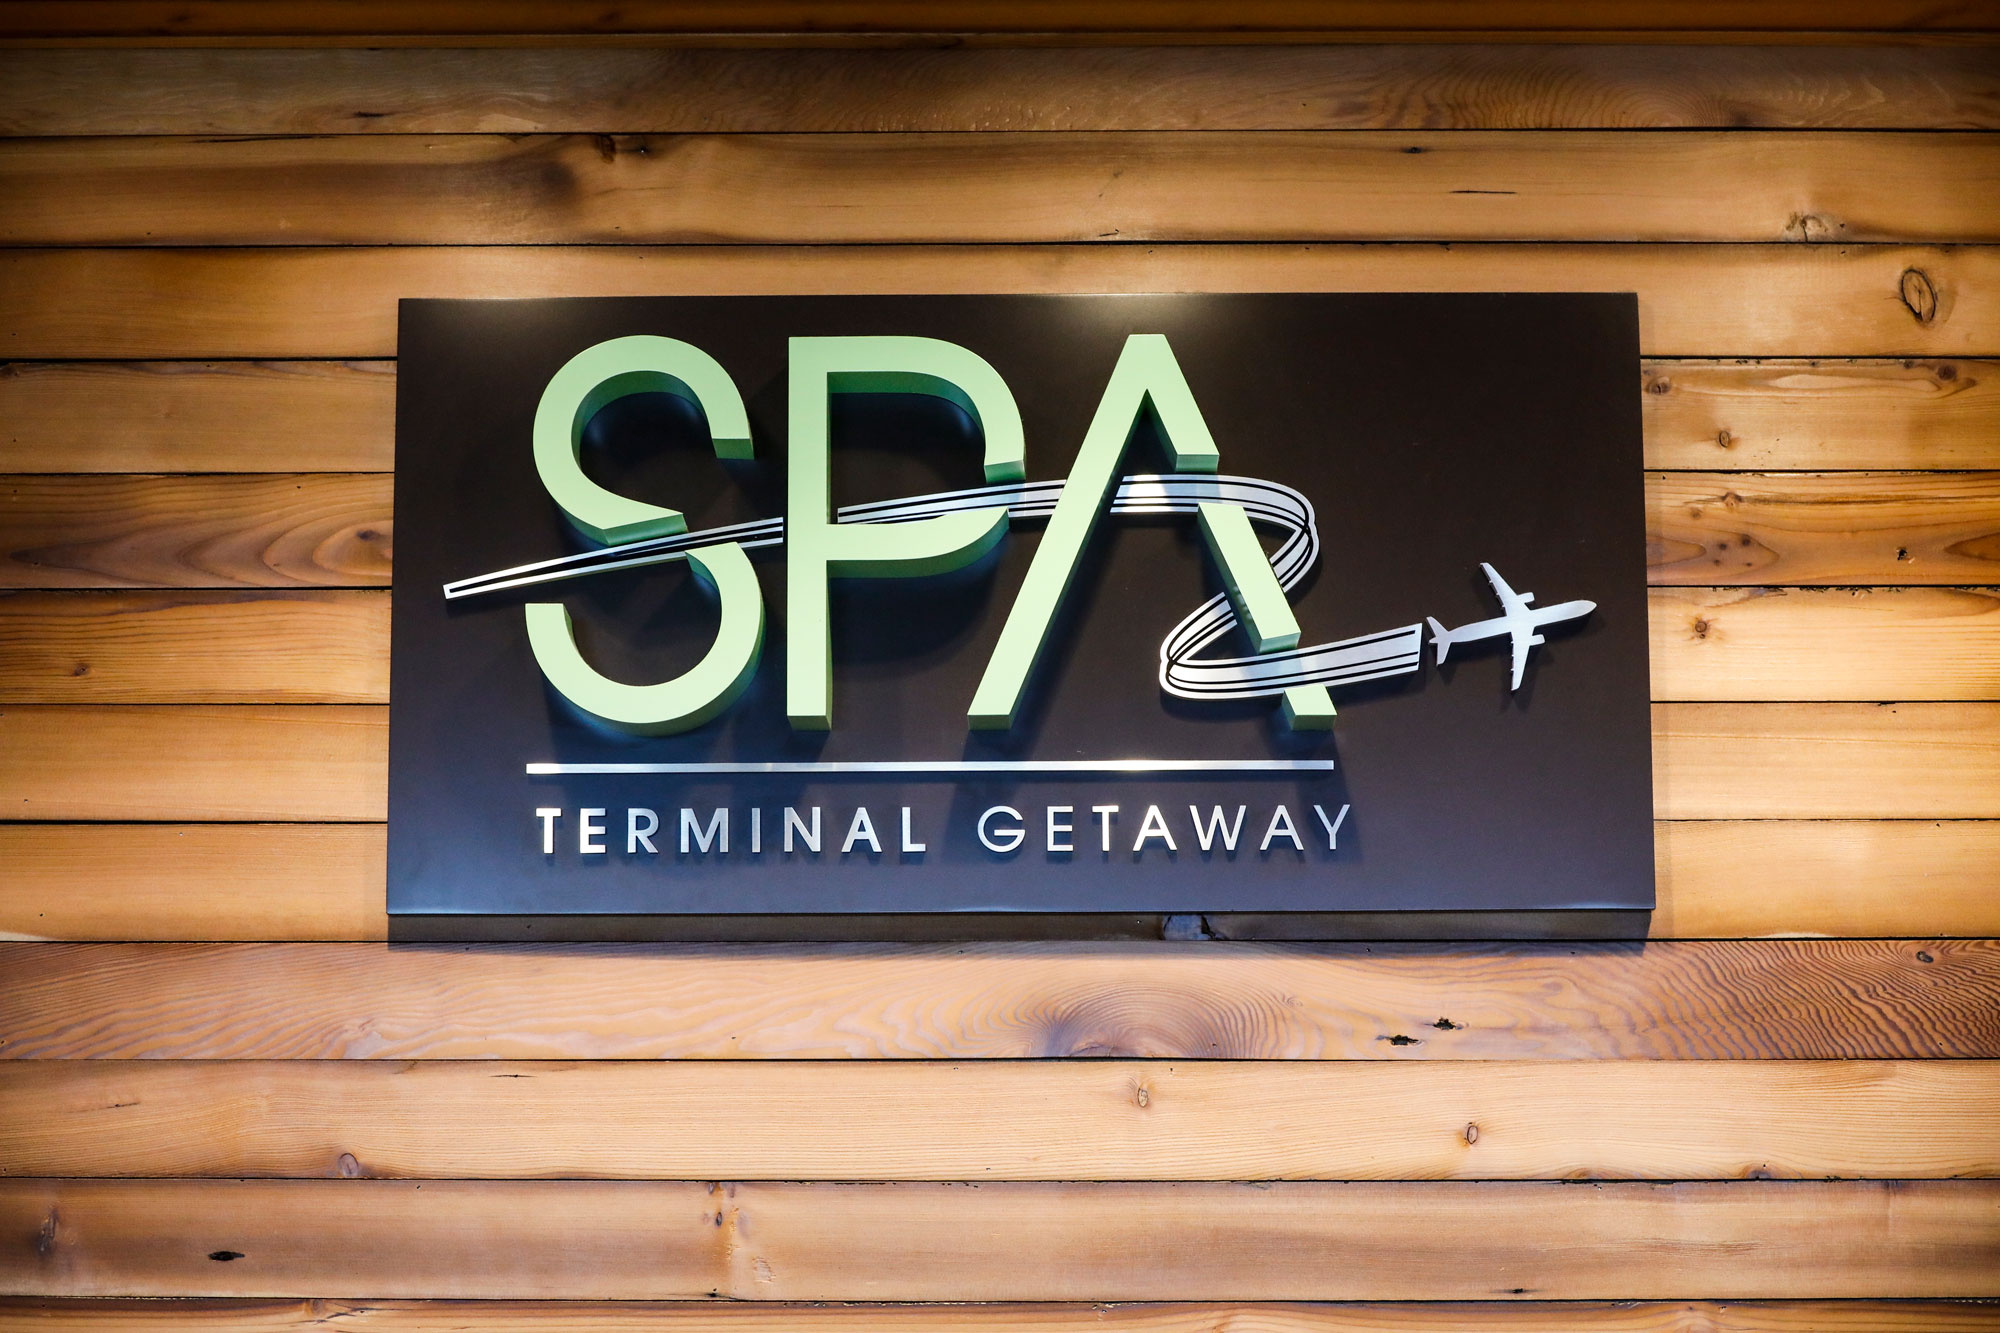 SEA Terminal Getaway Spa (C Gates) Sign